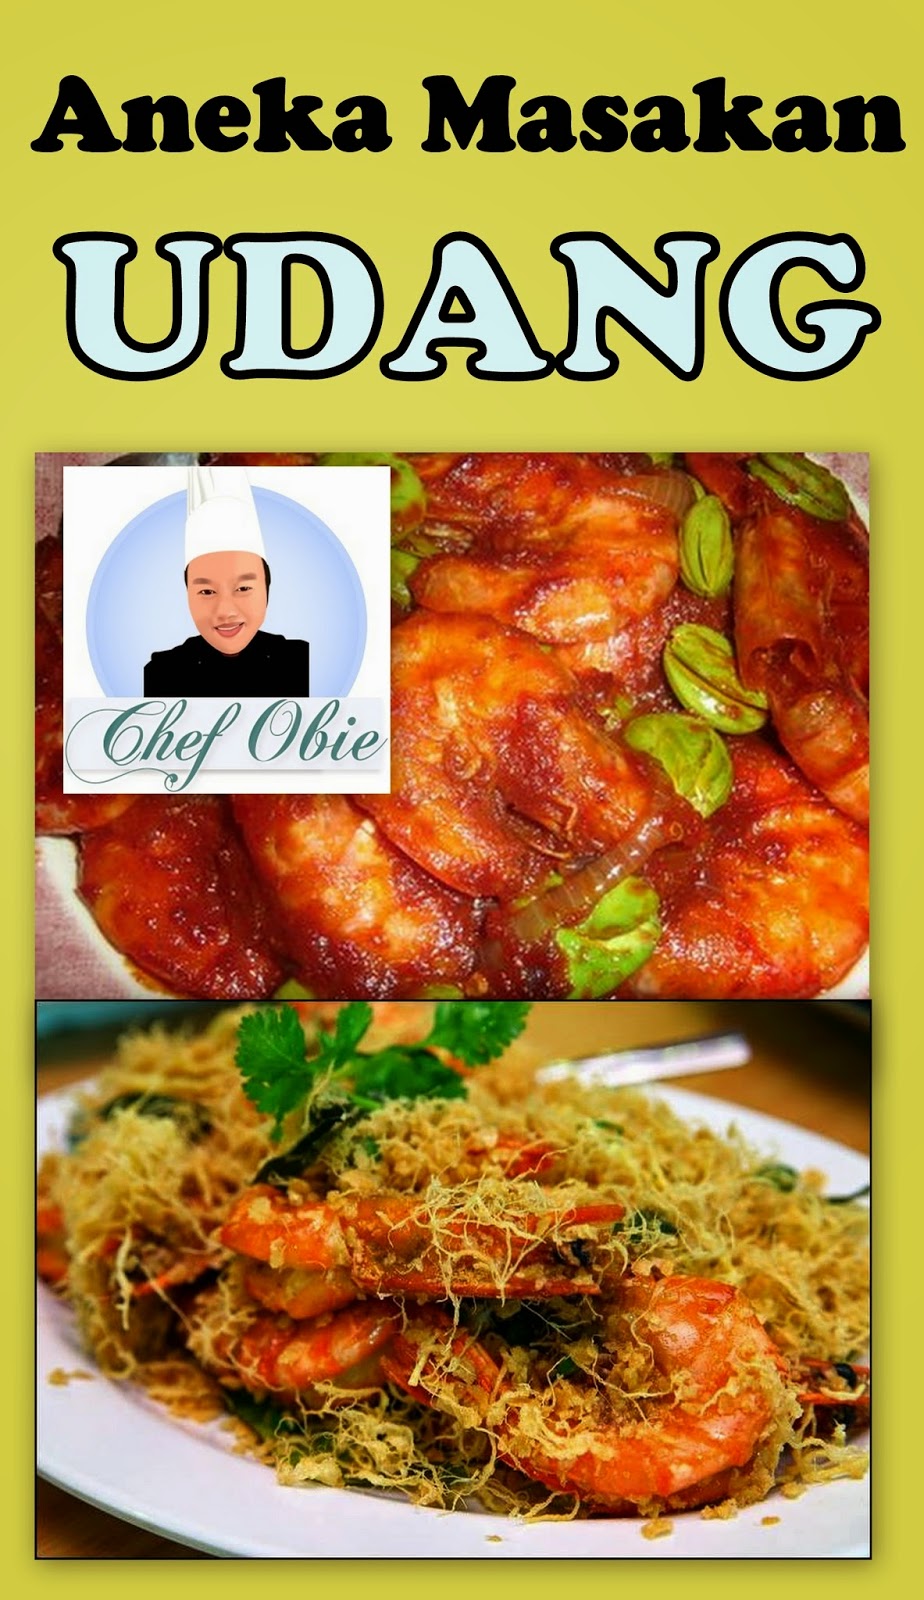 chef obie 1001 info dan resepi popular: Resepi Aneka Masakan Udang